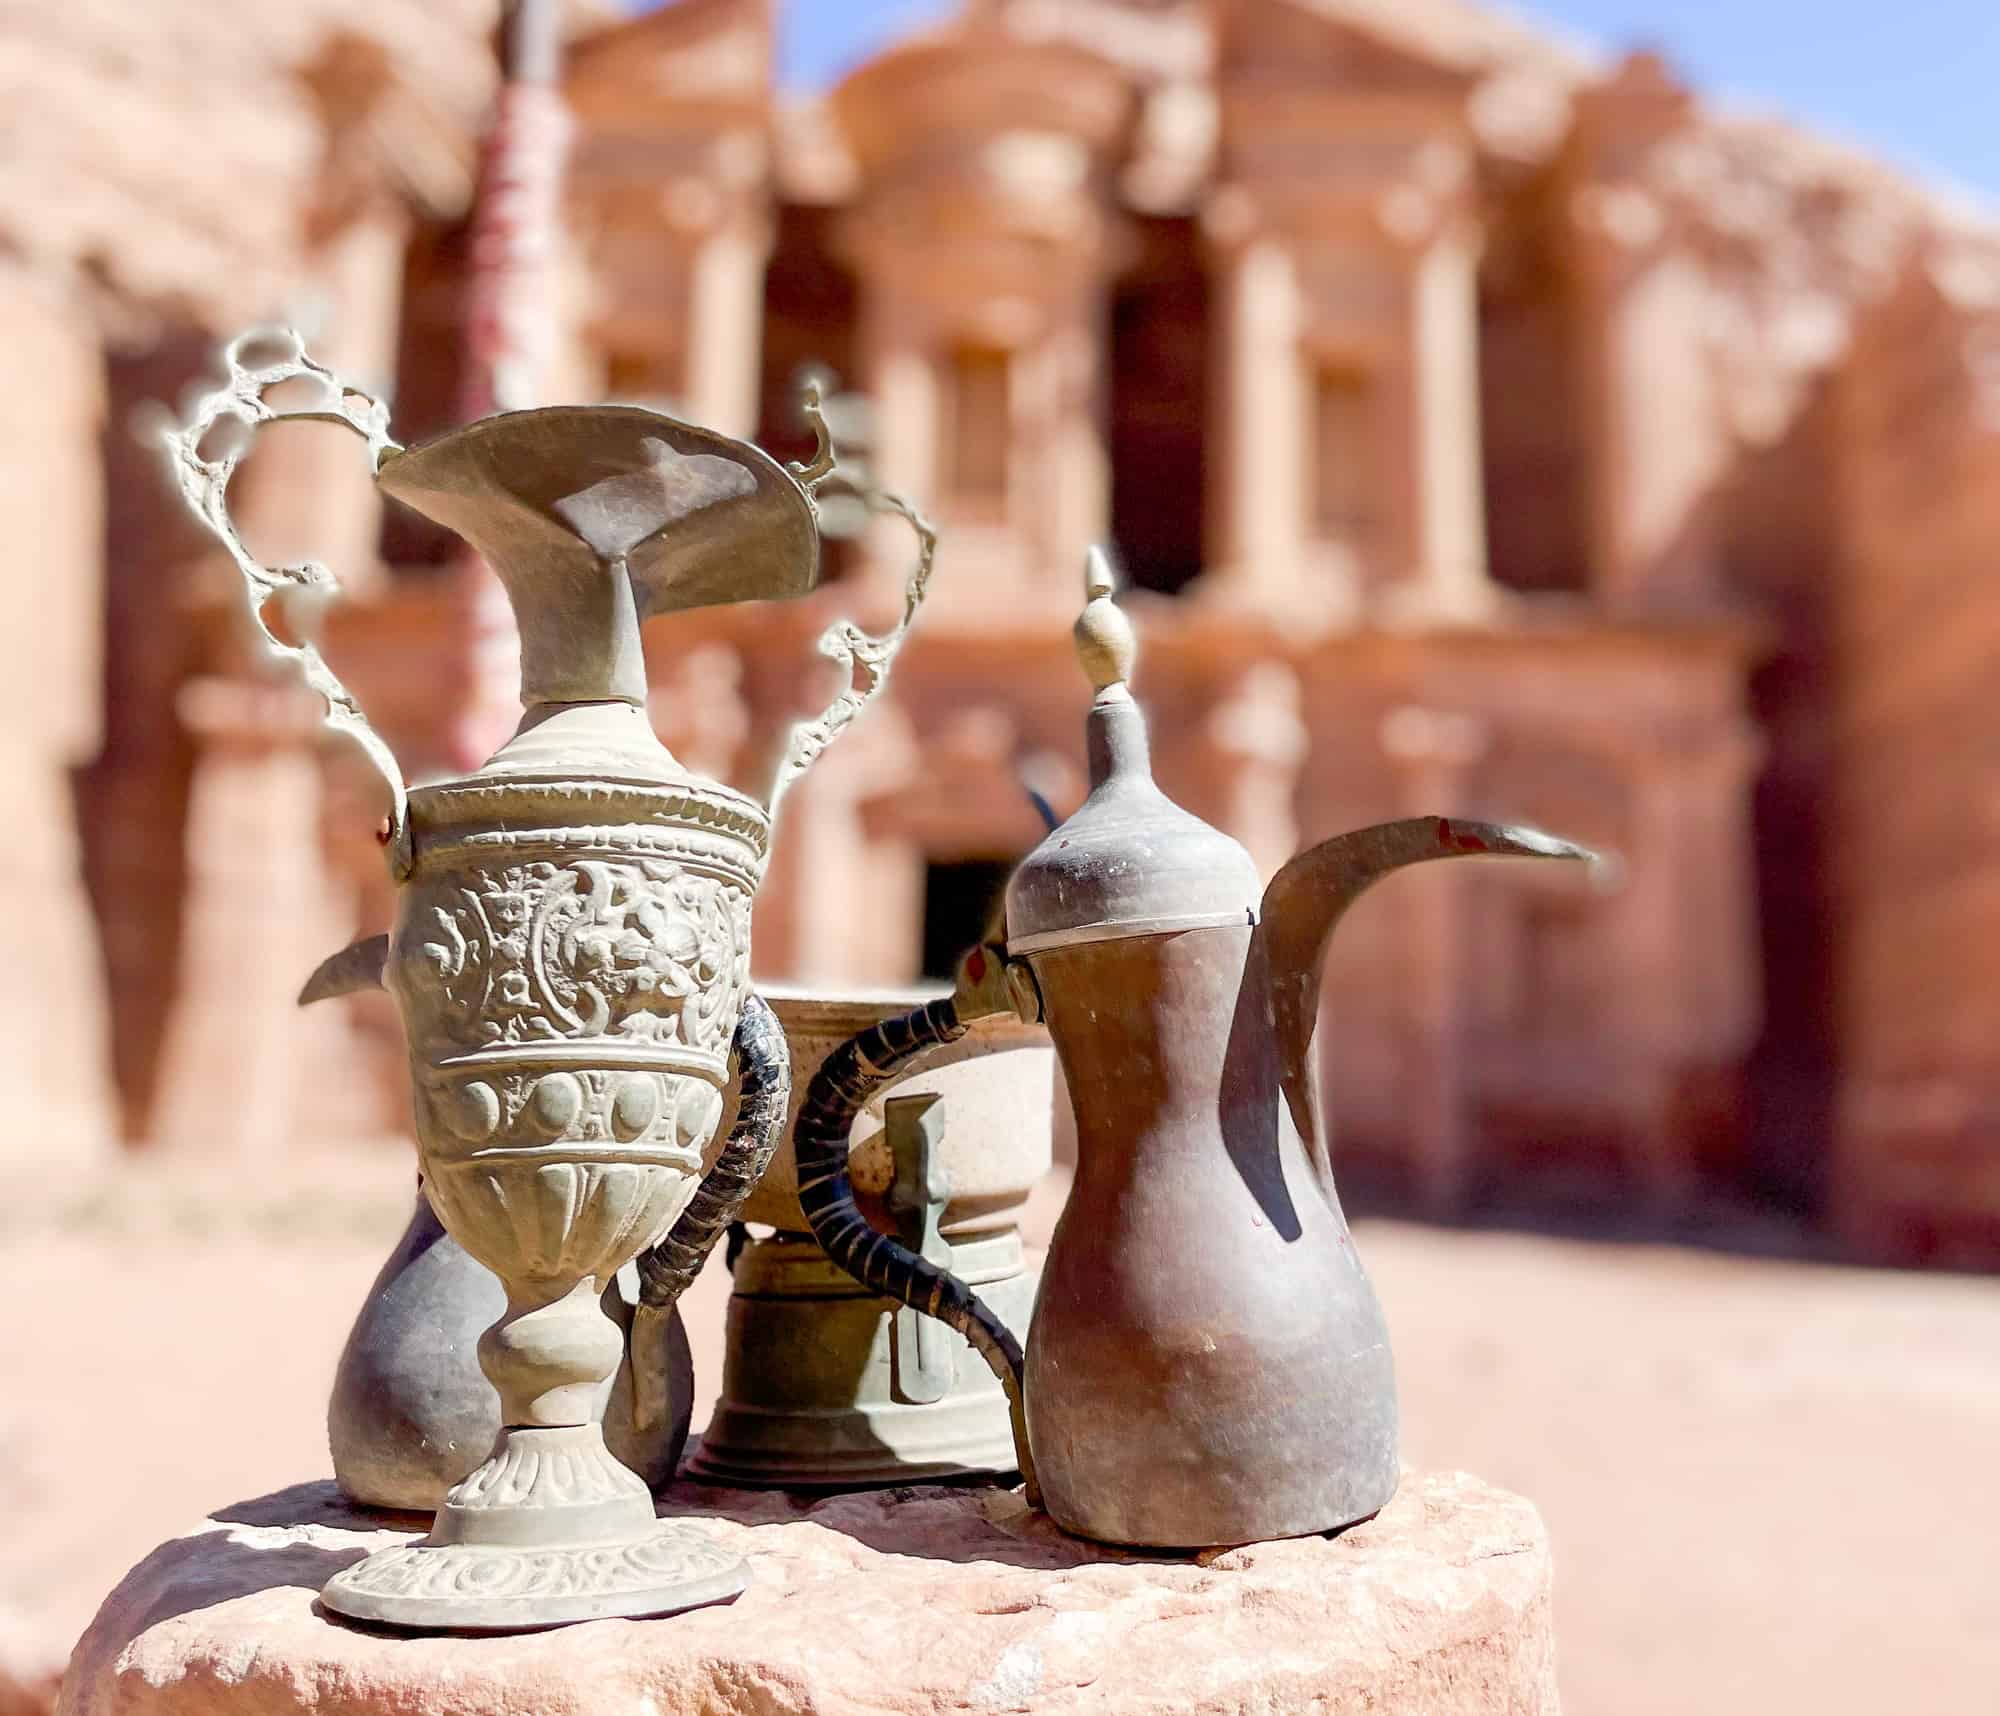 Jordan - Petra - Monastery - Coffee pots